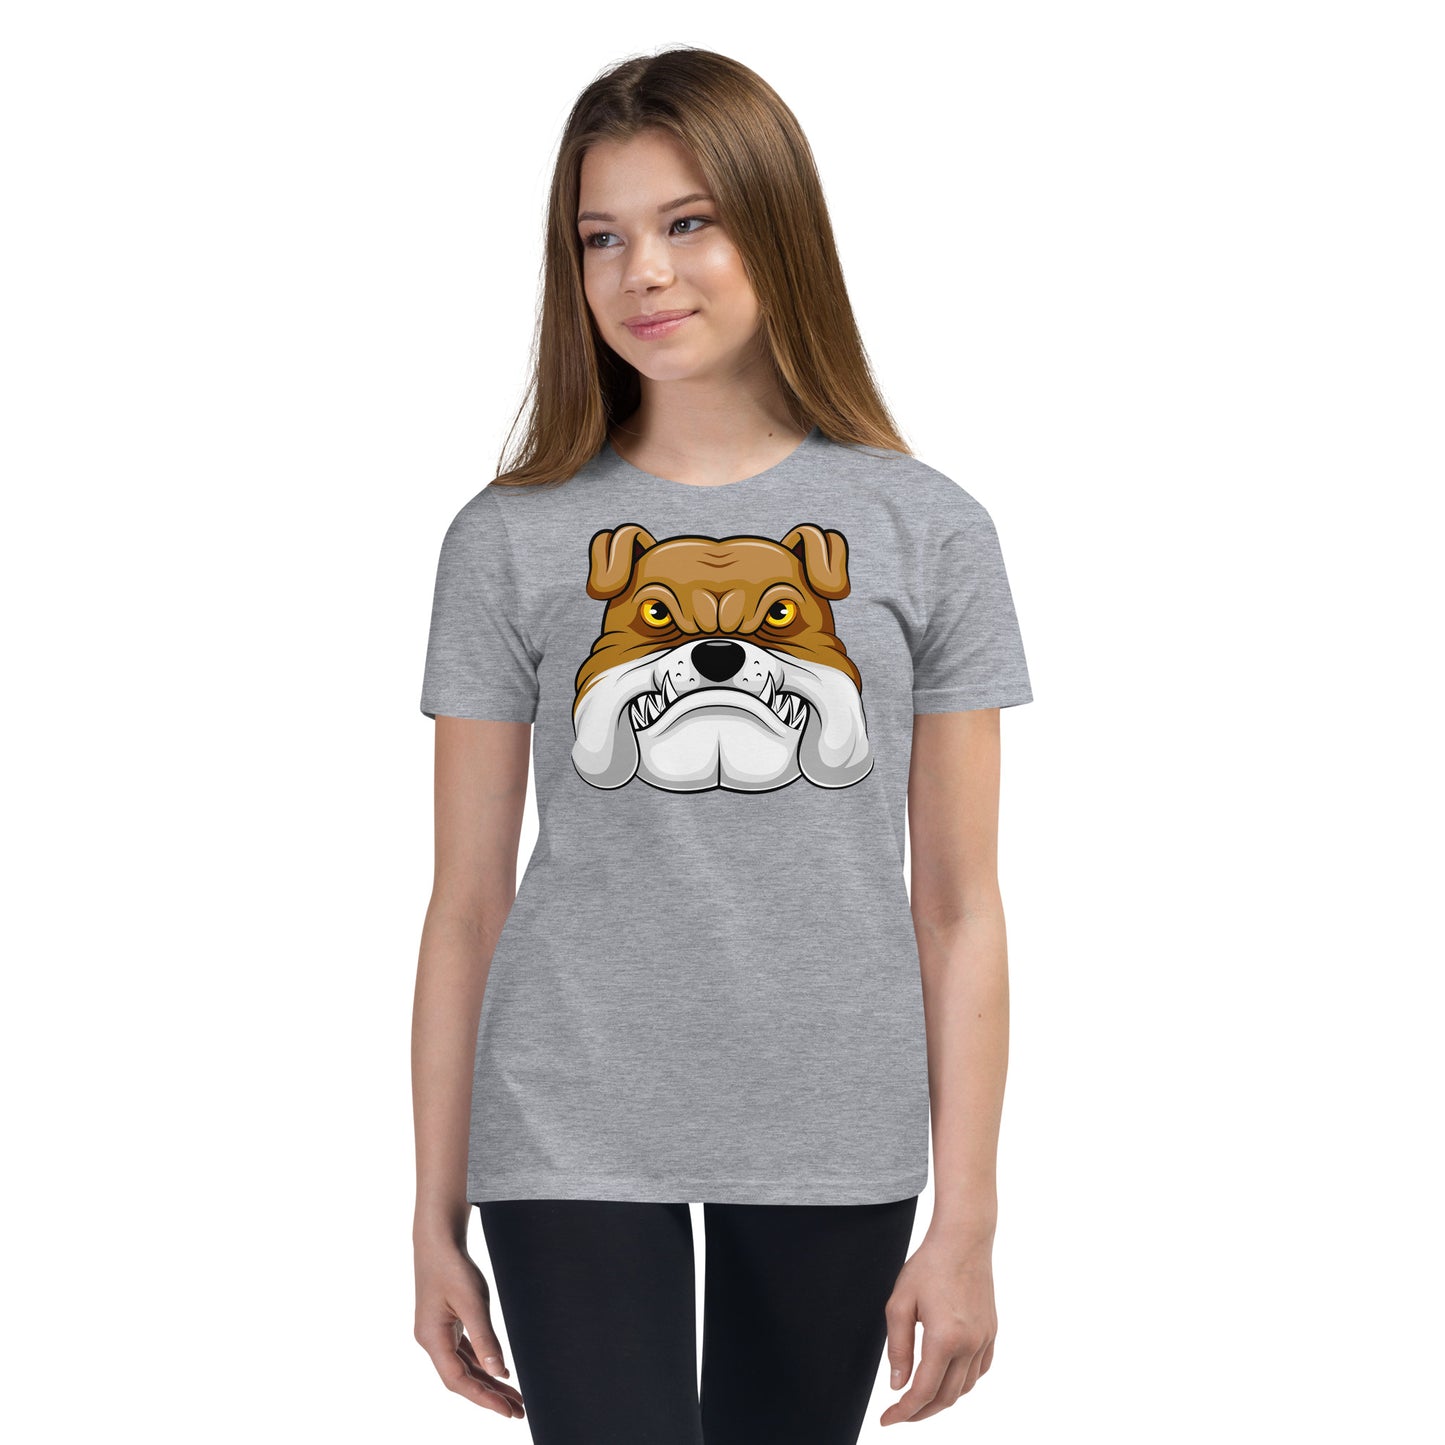 Bulldog Dog Face T-shirt, No. 0108